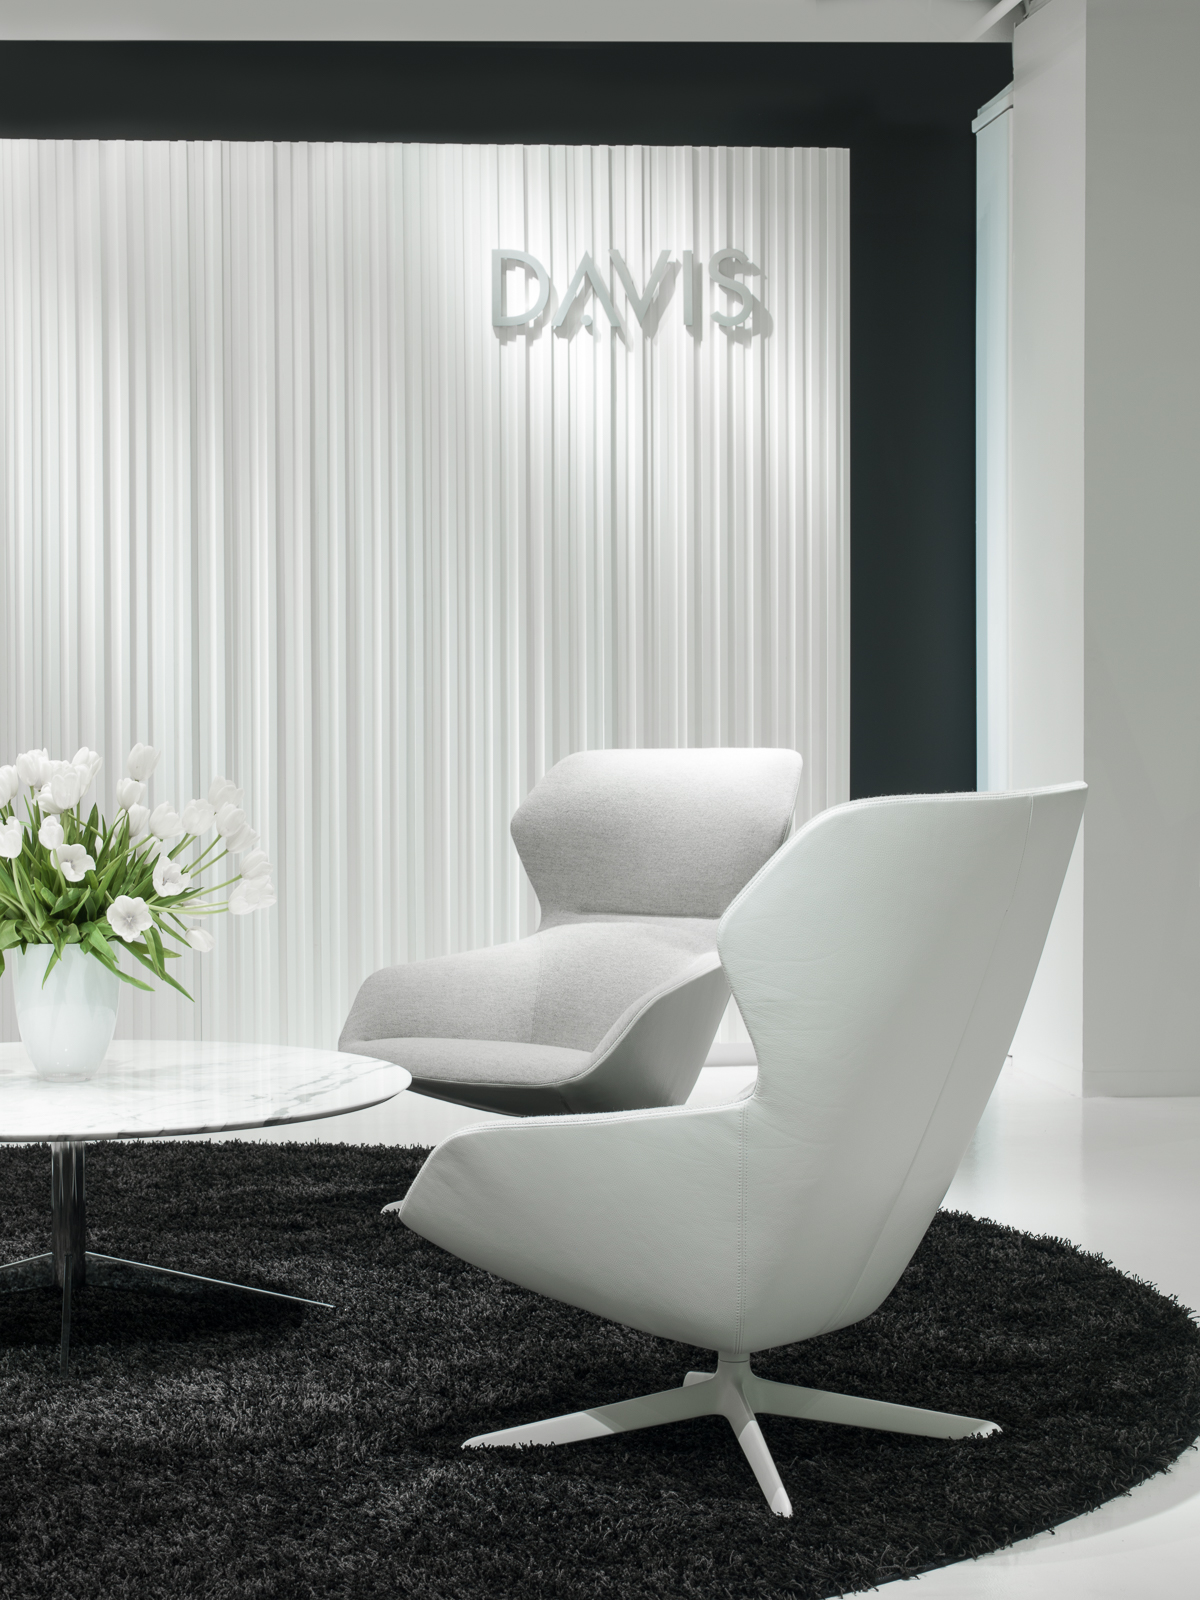 davis_furniture-1.jpg